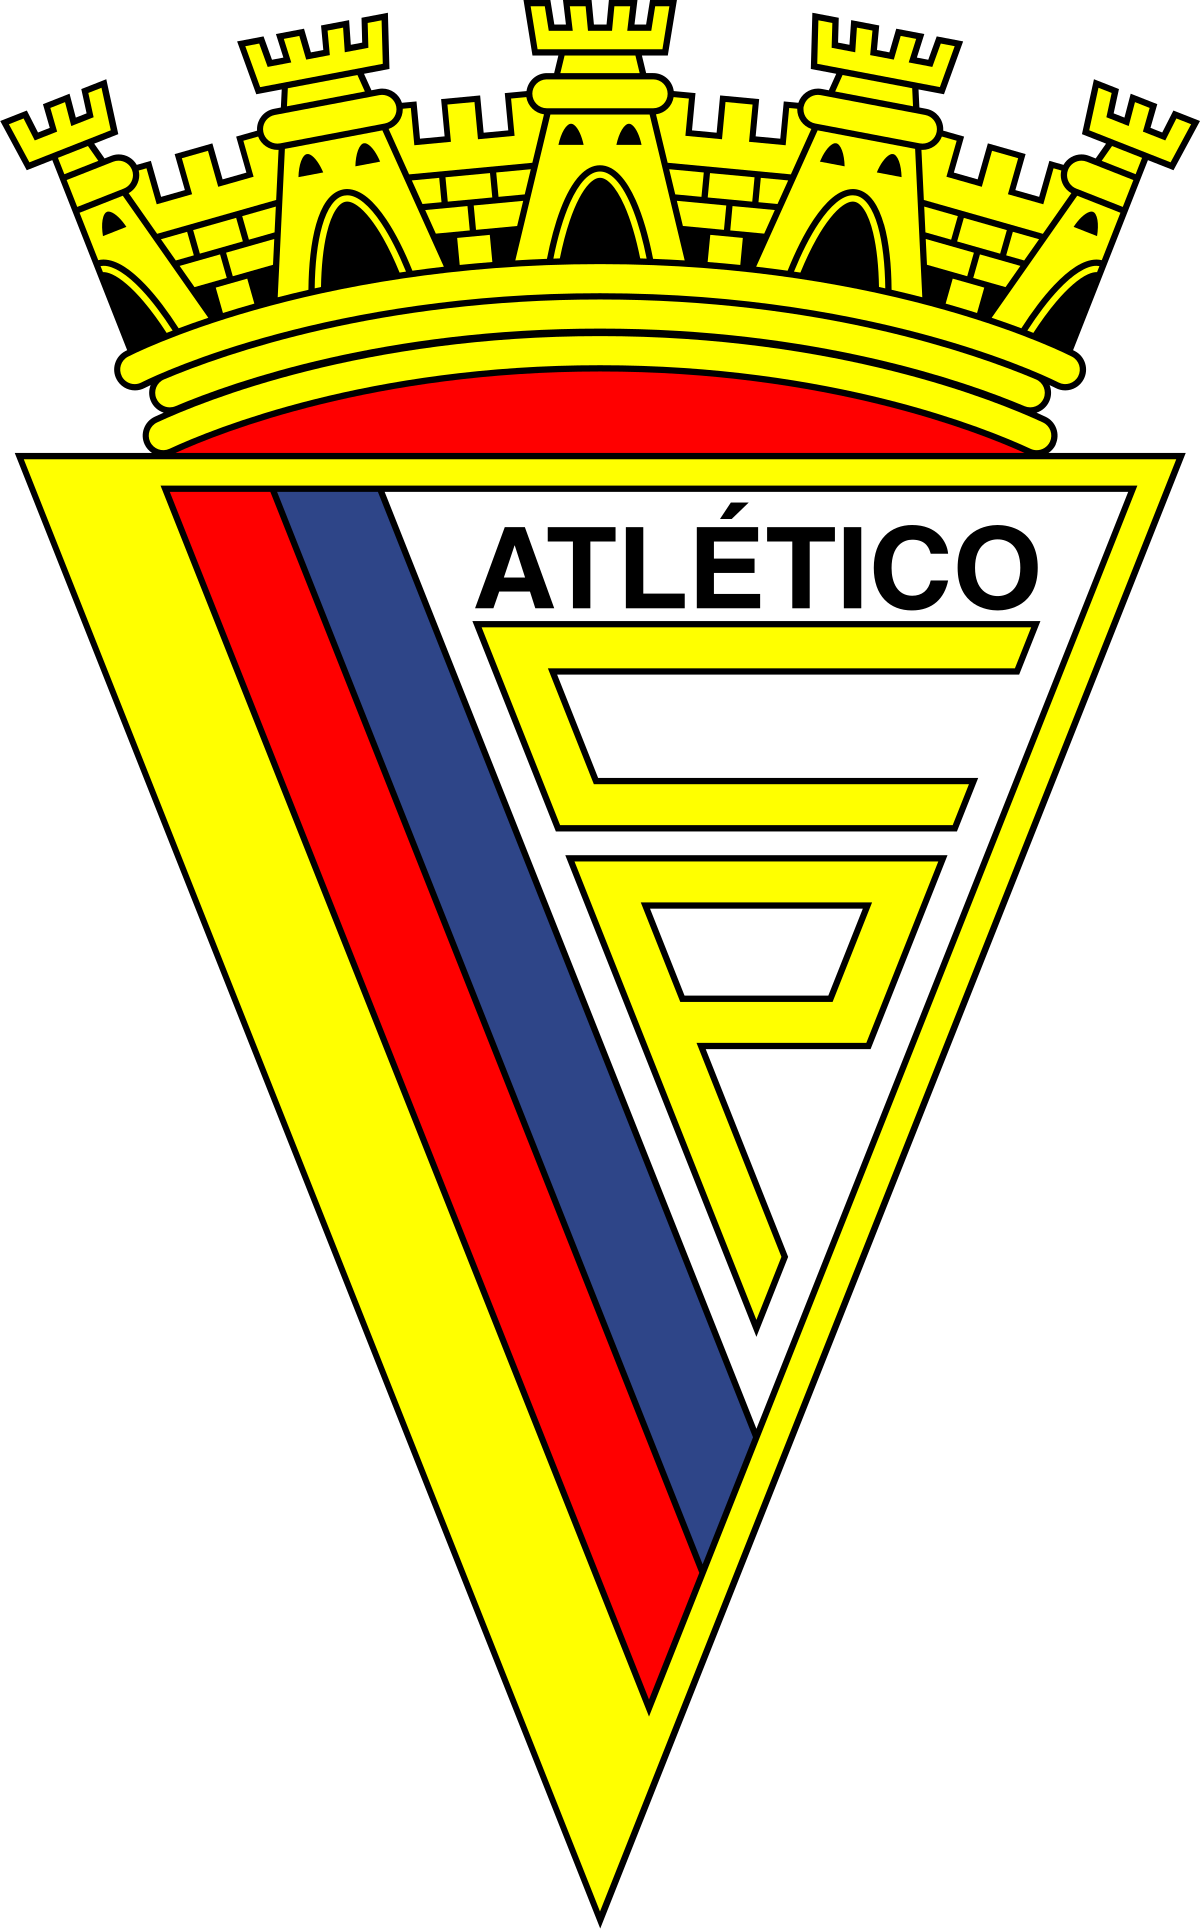 Nacional Atlético Clube (SP) - Wikipedia